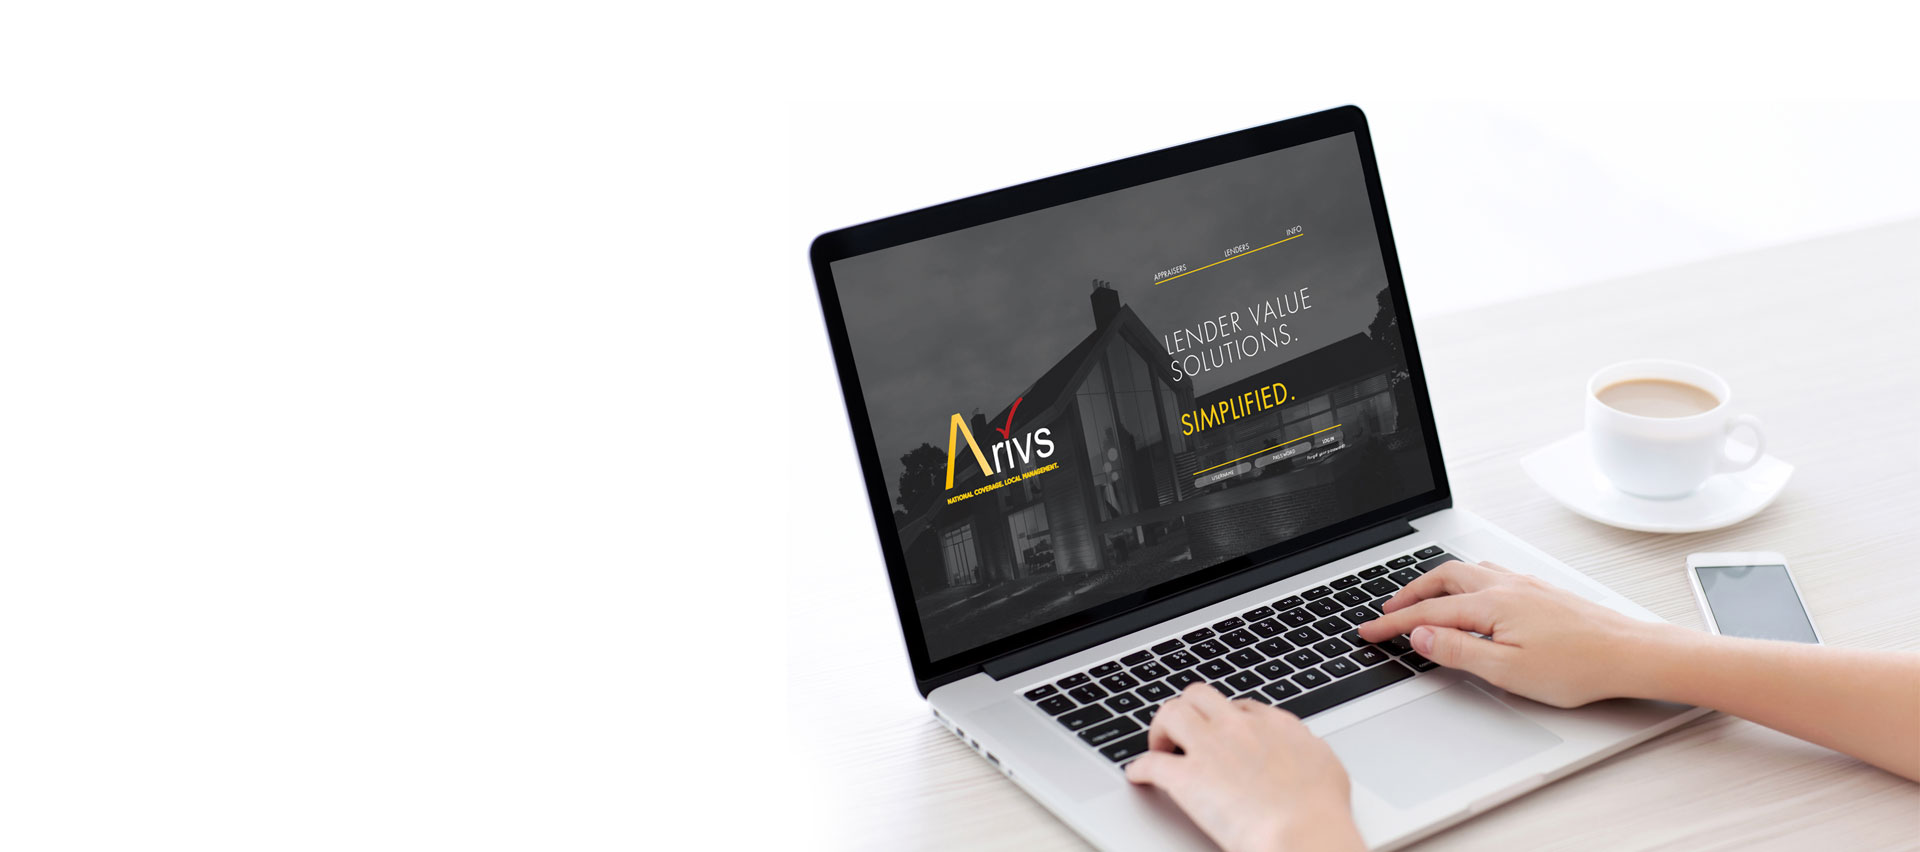 Arivs logo on laptop - appraisal process on laptop screen